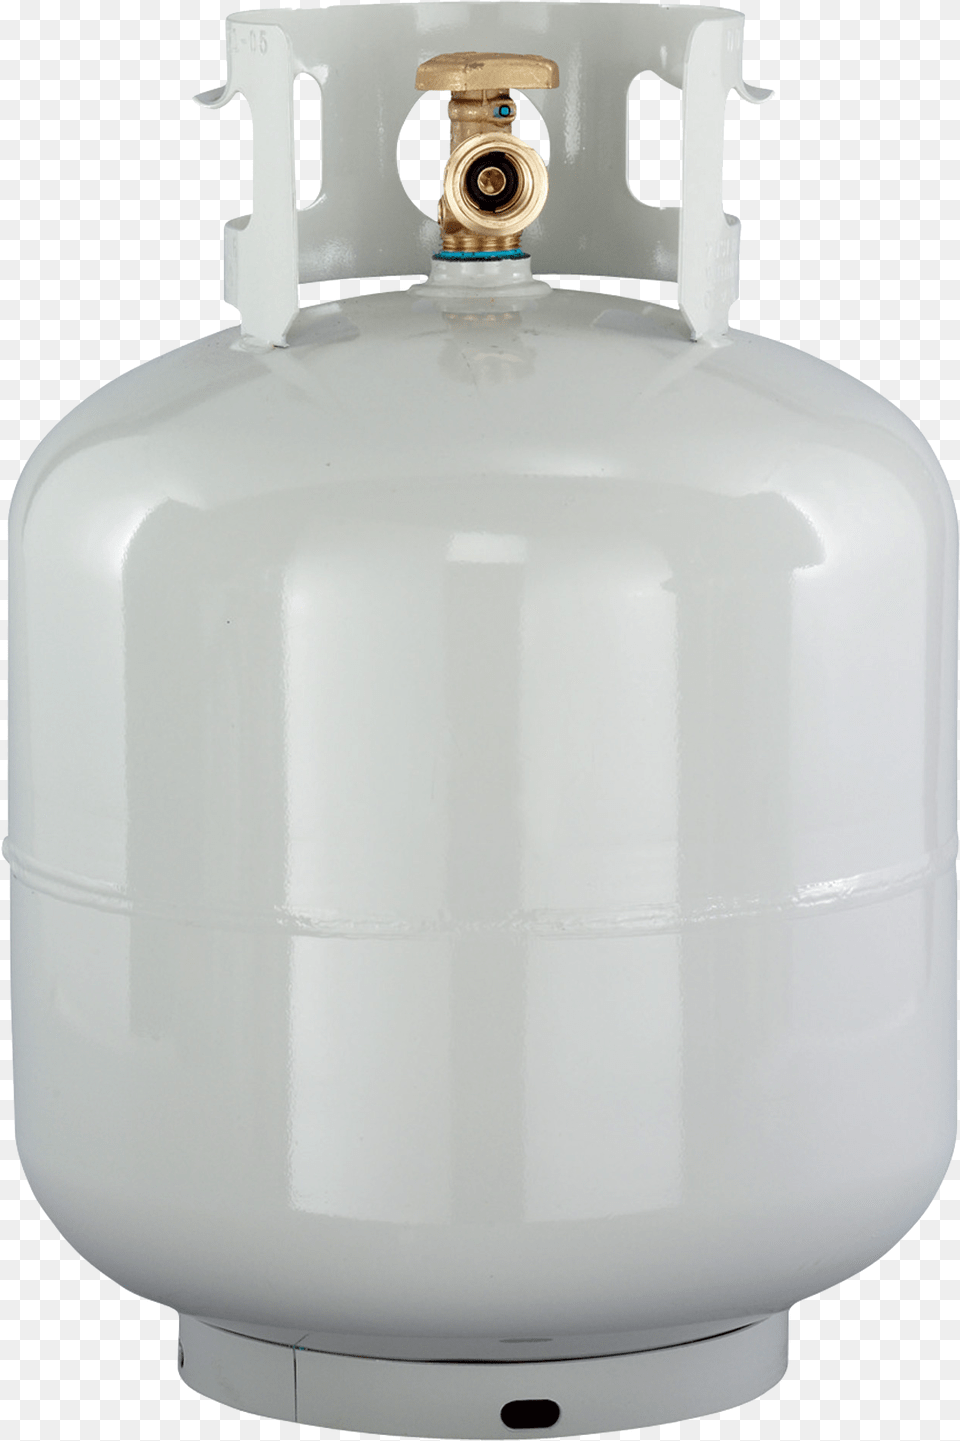 Propane Tank, Cylinder Free Transparent Png